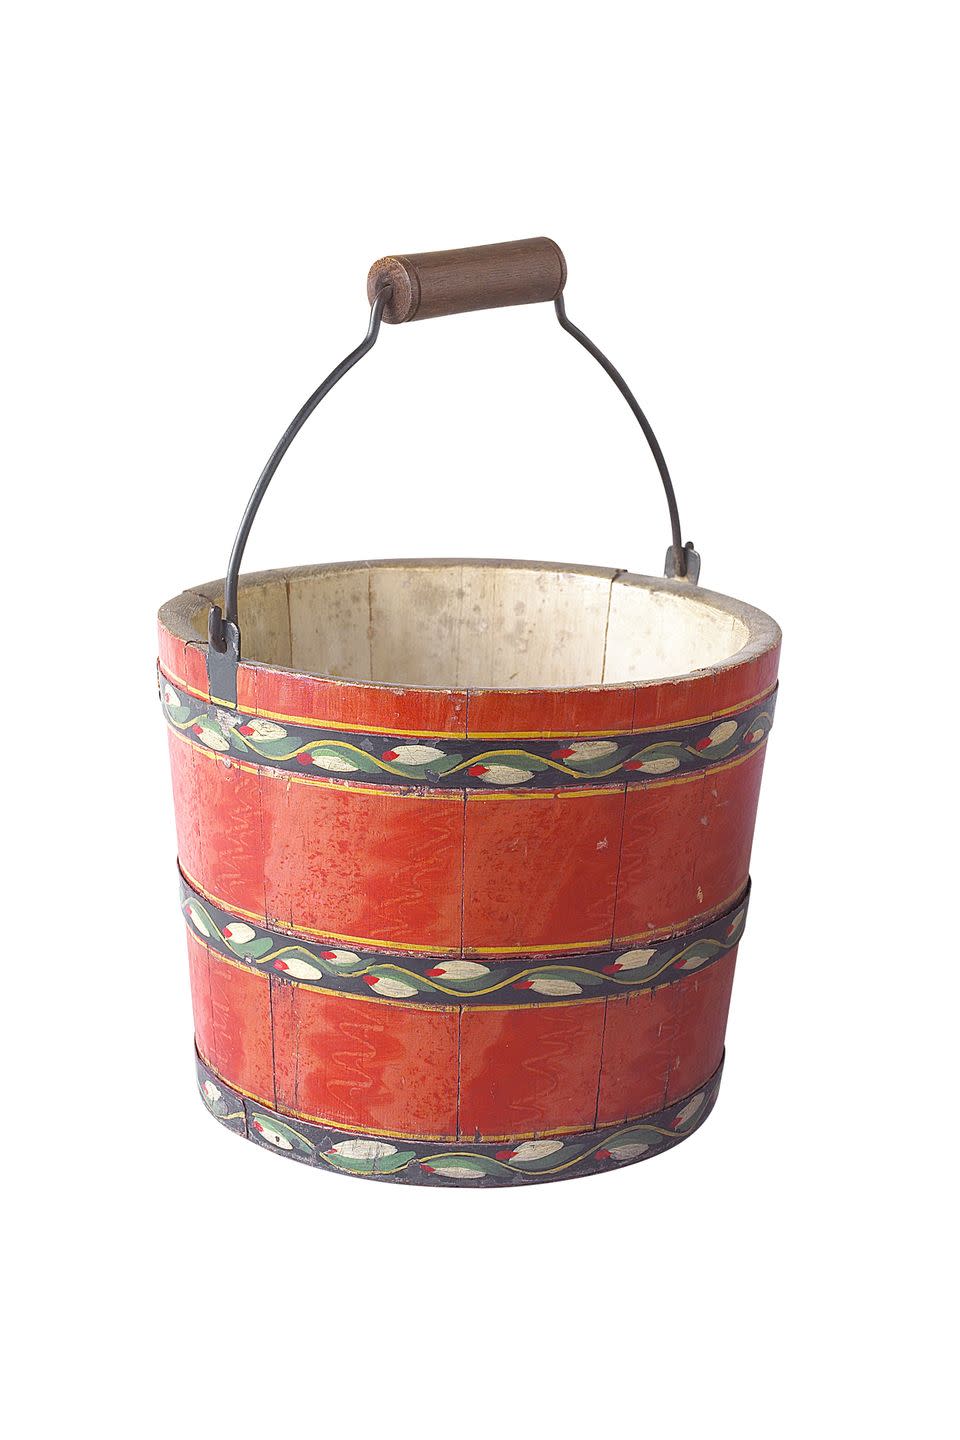 19th-Century Lehnware Bucket